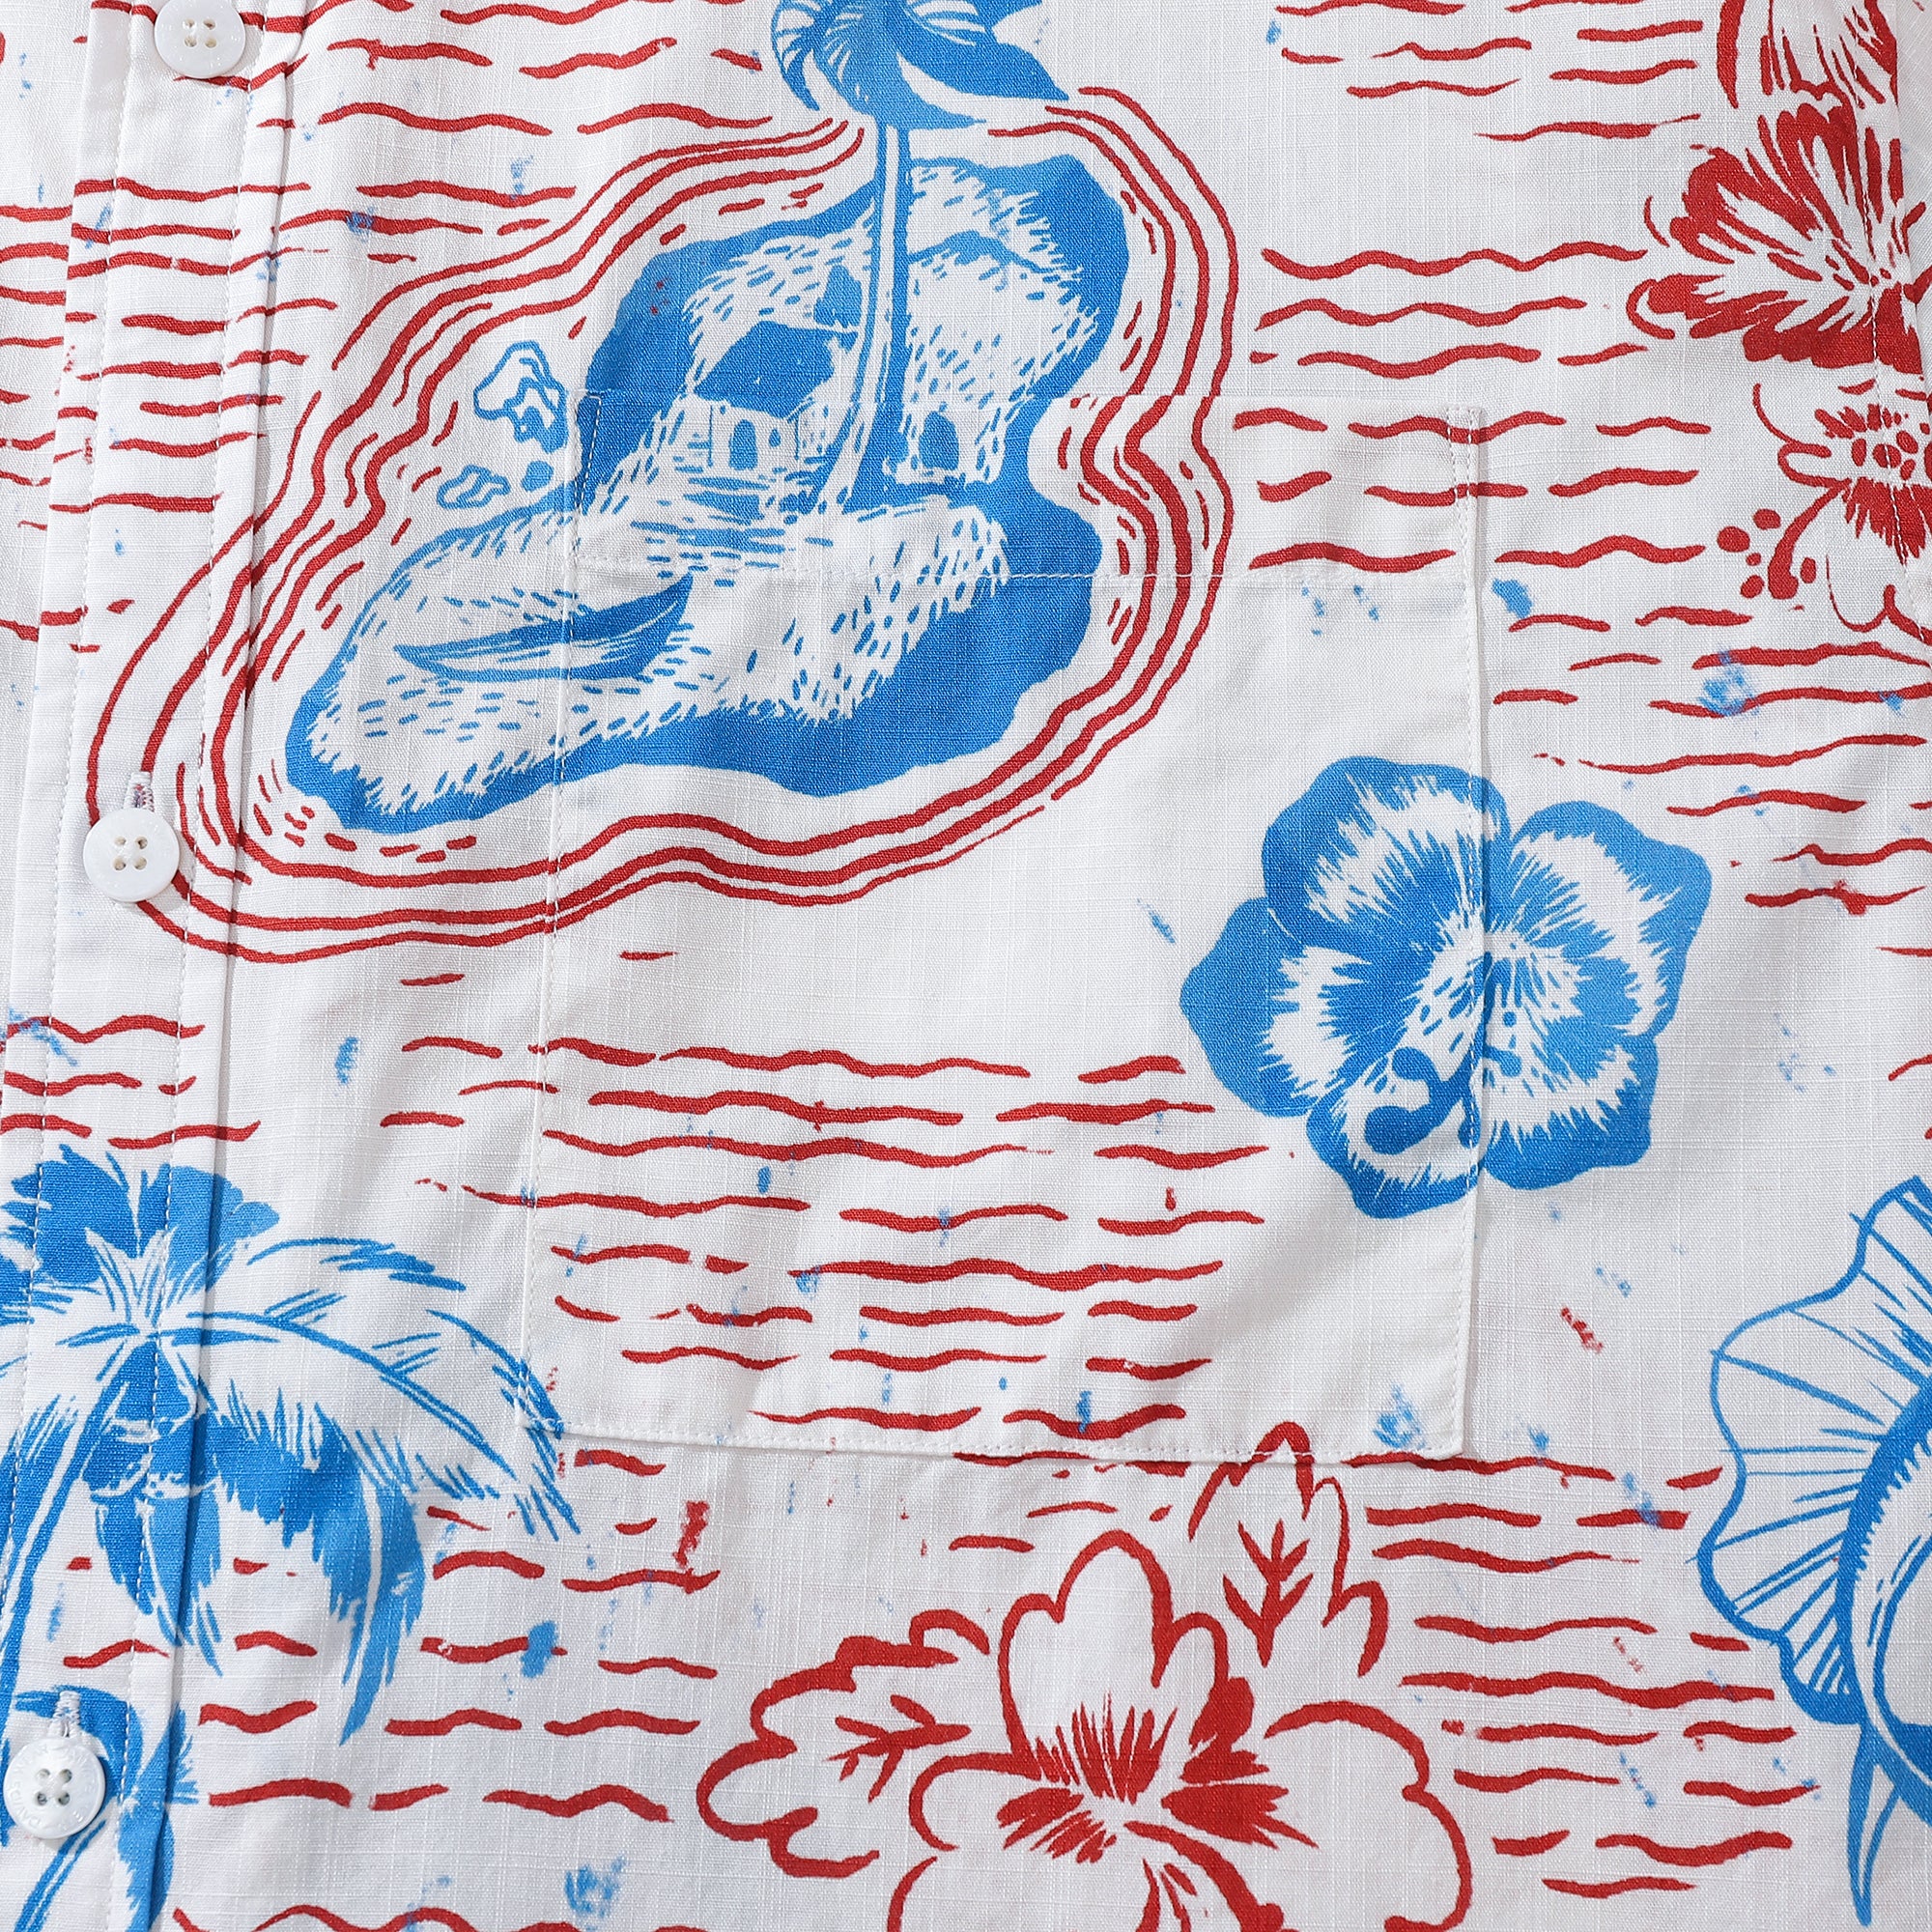 Hawaiian Men's Shirt with Tuna and Tropical Scenery Print, Made of 100% Cotton